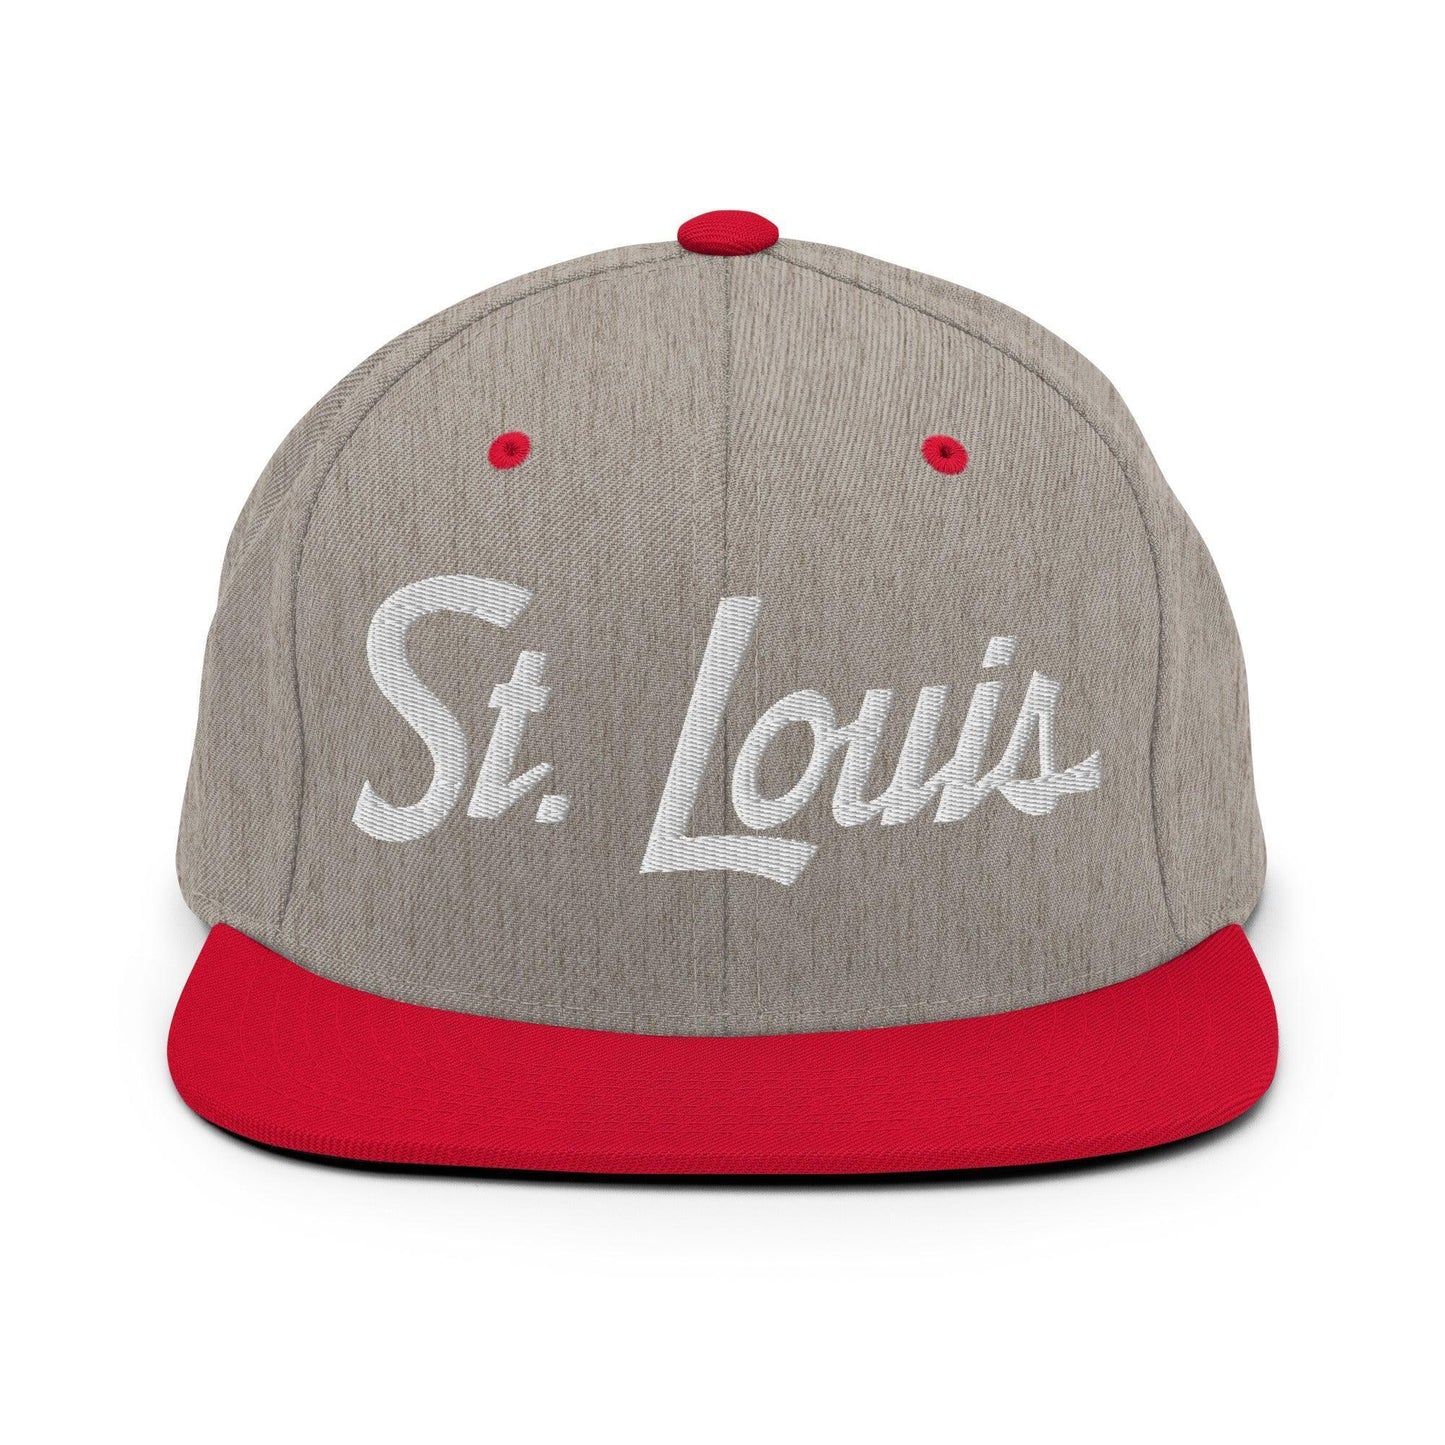 St. Louis Script Snapback Hat Heather Grey Red